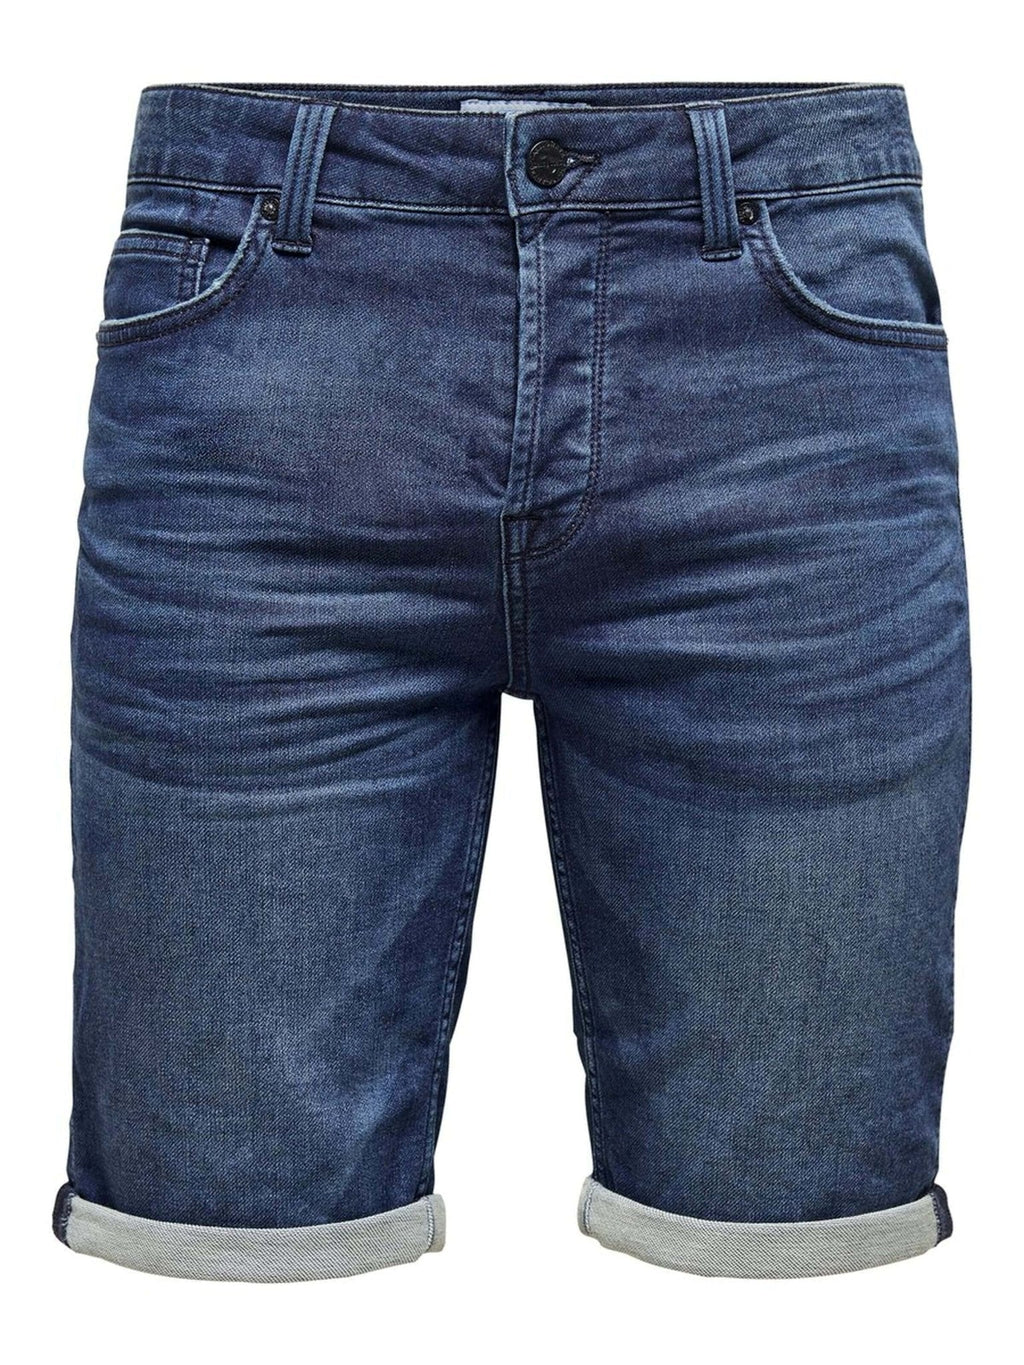 Shorts en jean - denim bleu